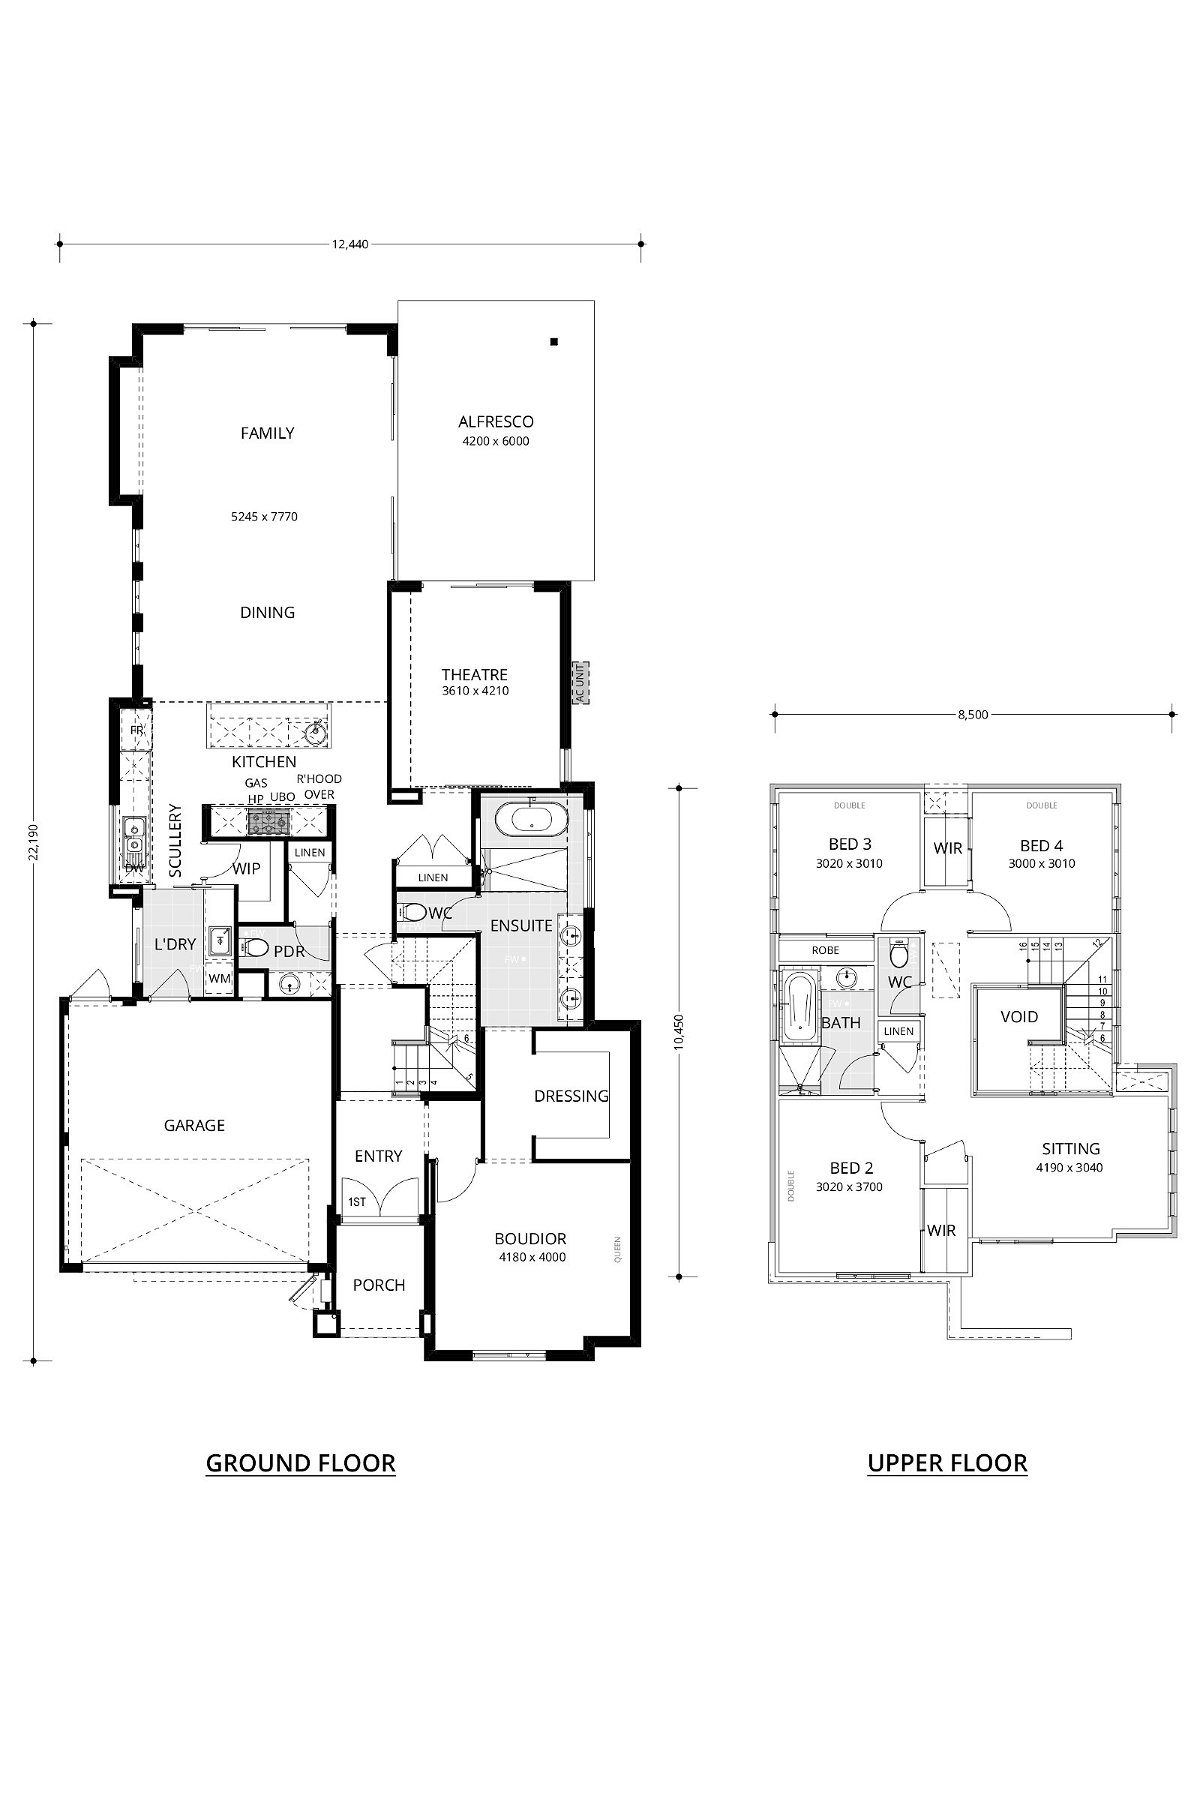 Residential Attitudes - The Muse | Display - Floorplan - The Muse Website Floorplan